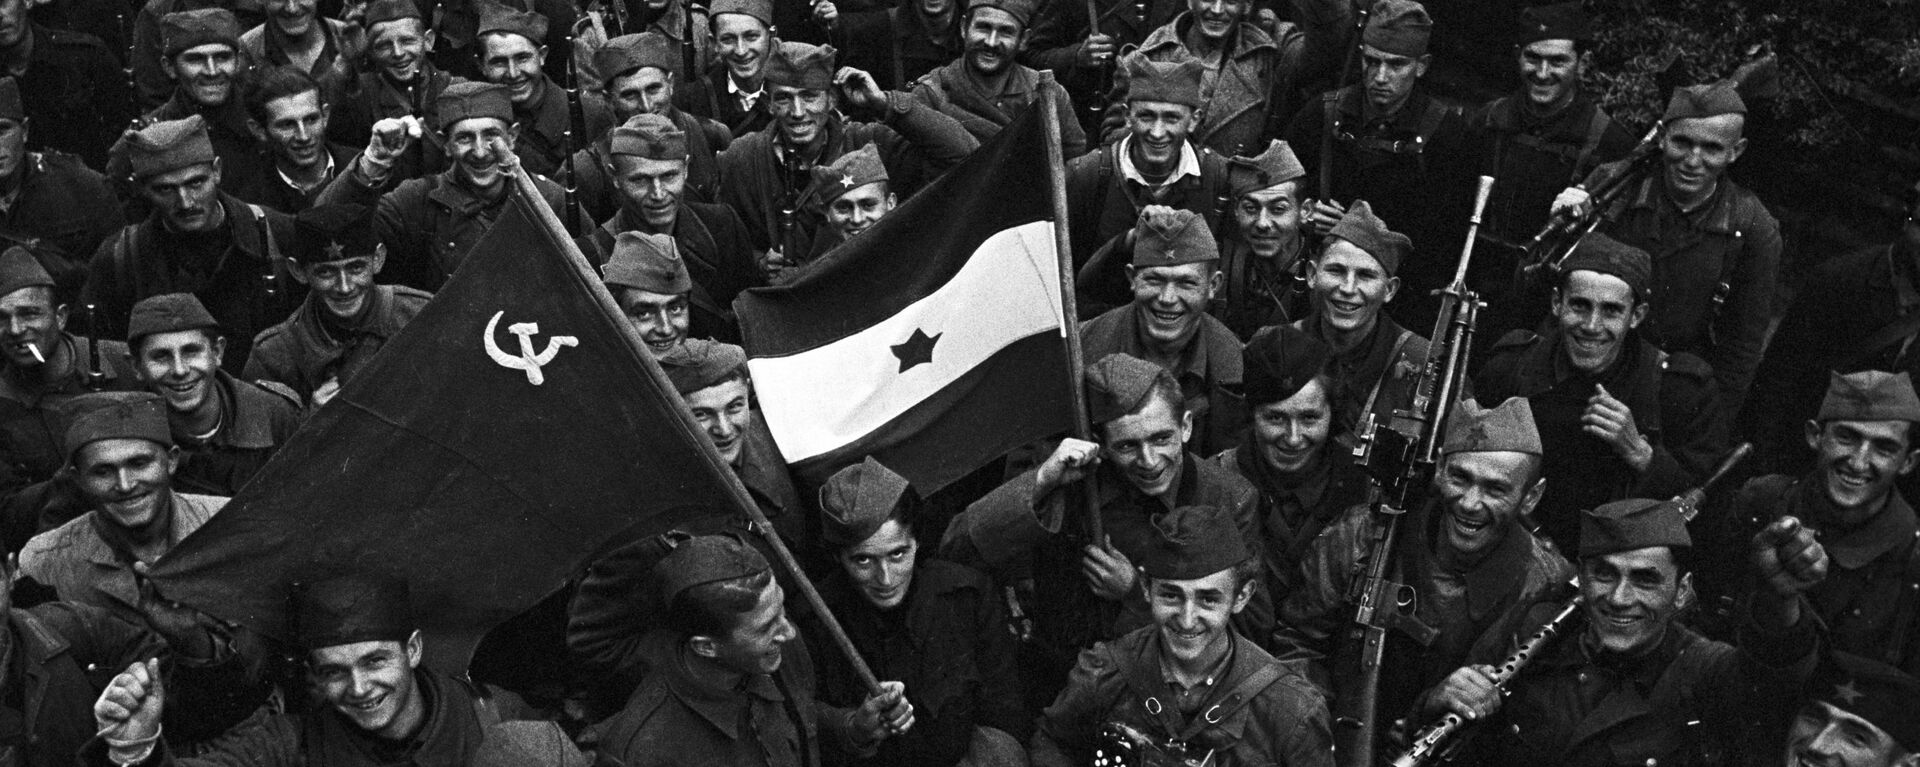 Veliki otadžbinski rat 1941-1945. Oslobođenje Beograda, oktobar 1944. - Sputnik Srbija, 1920, 10.11.2021